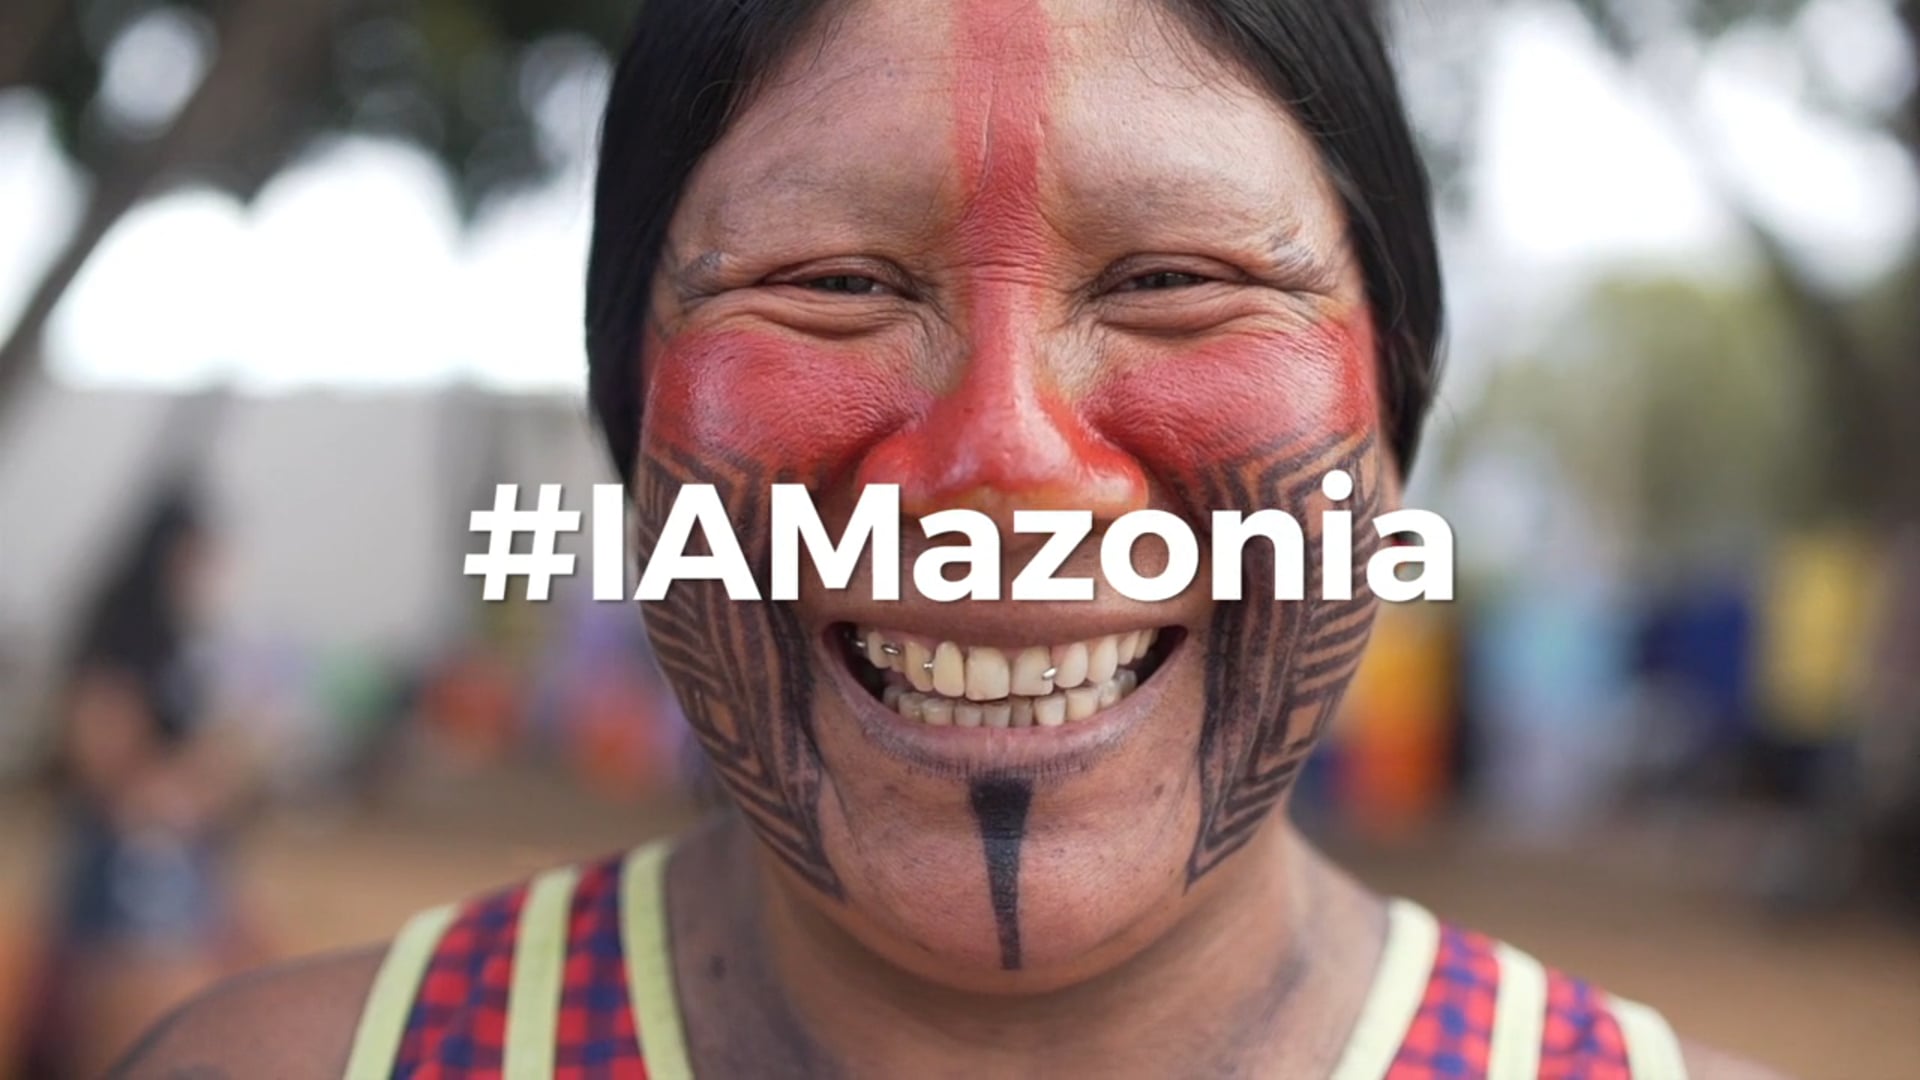 Avaaz - #IAMazonia - Fight like an Amazon girl